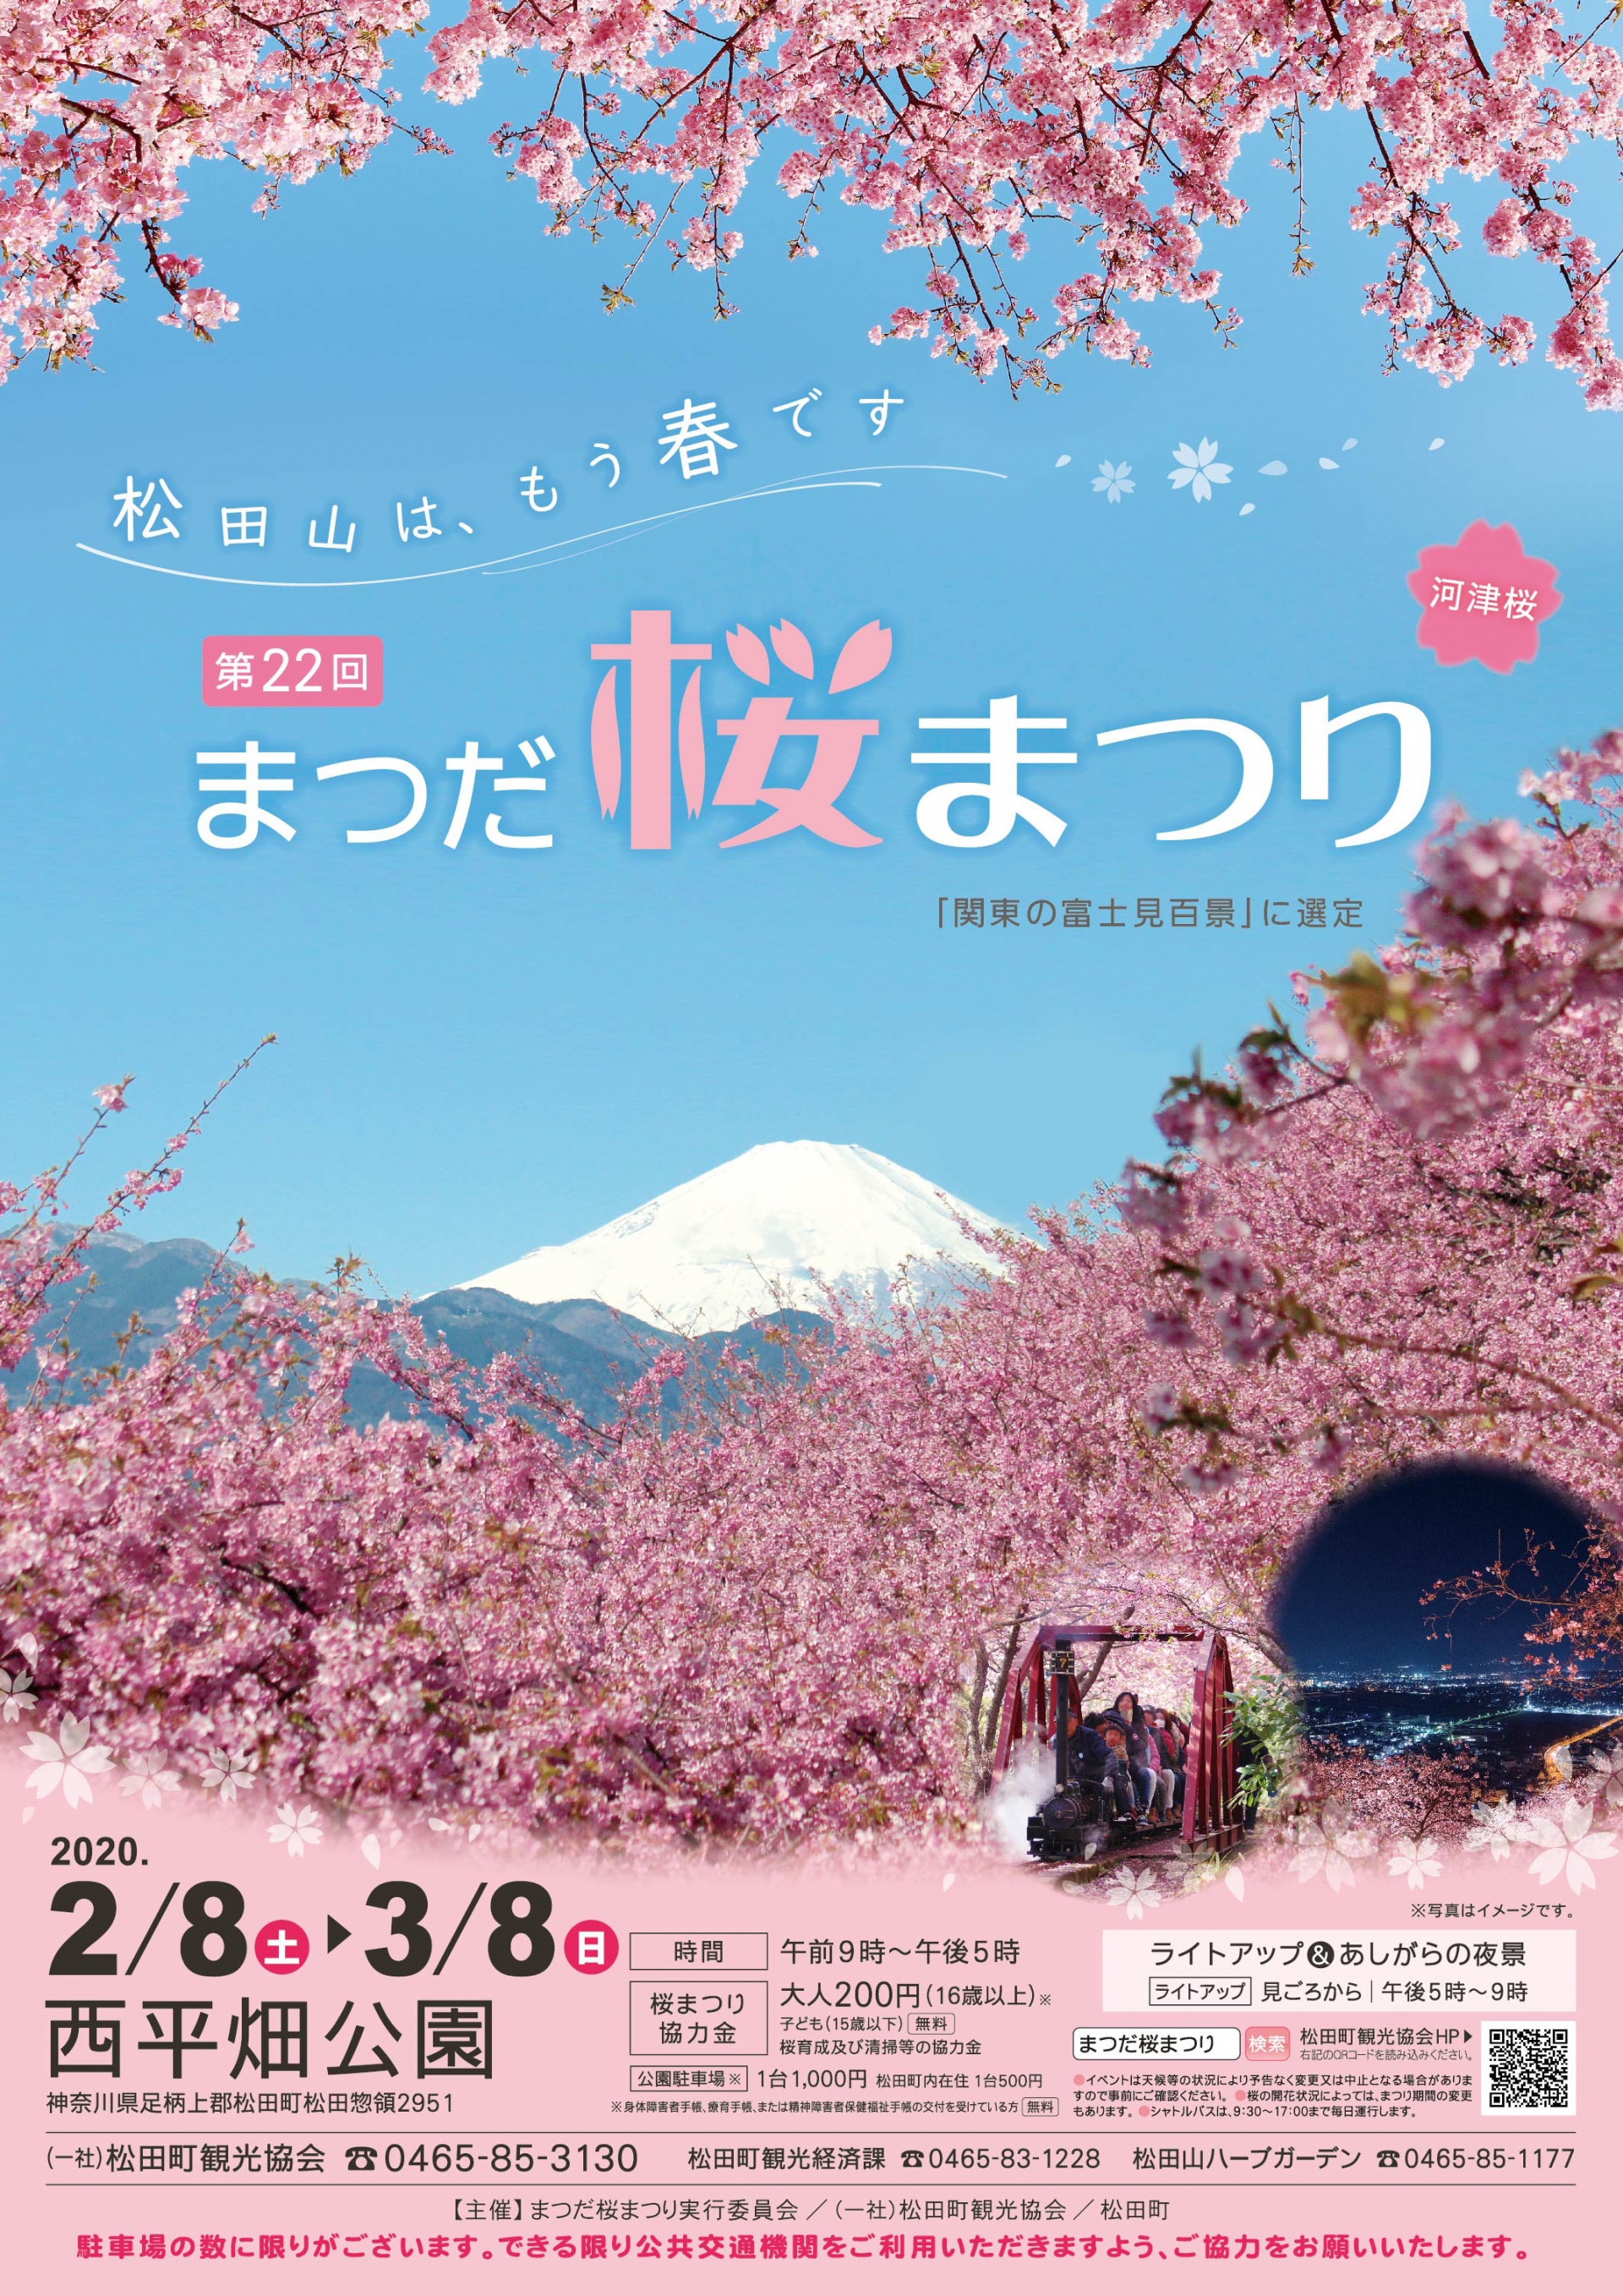 Mitsuboshi Colors Ueno Cherry Blossom Festival Map 2018